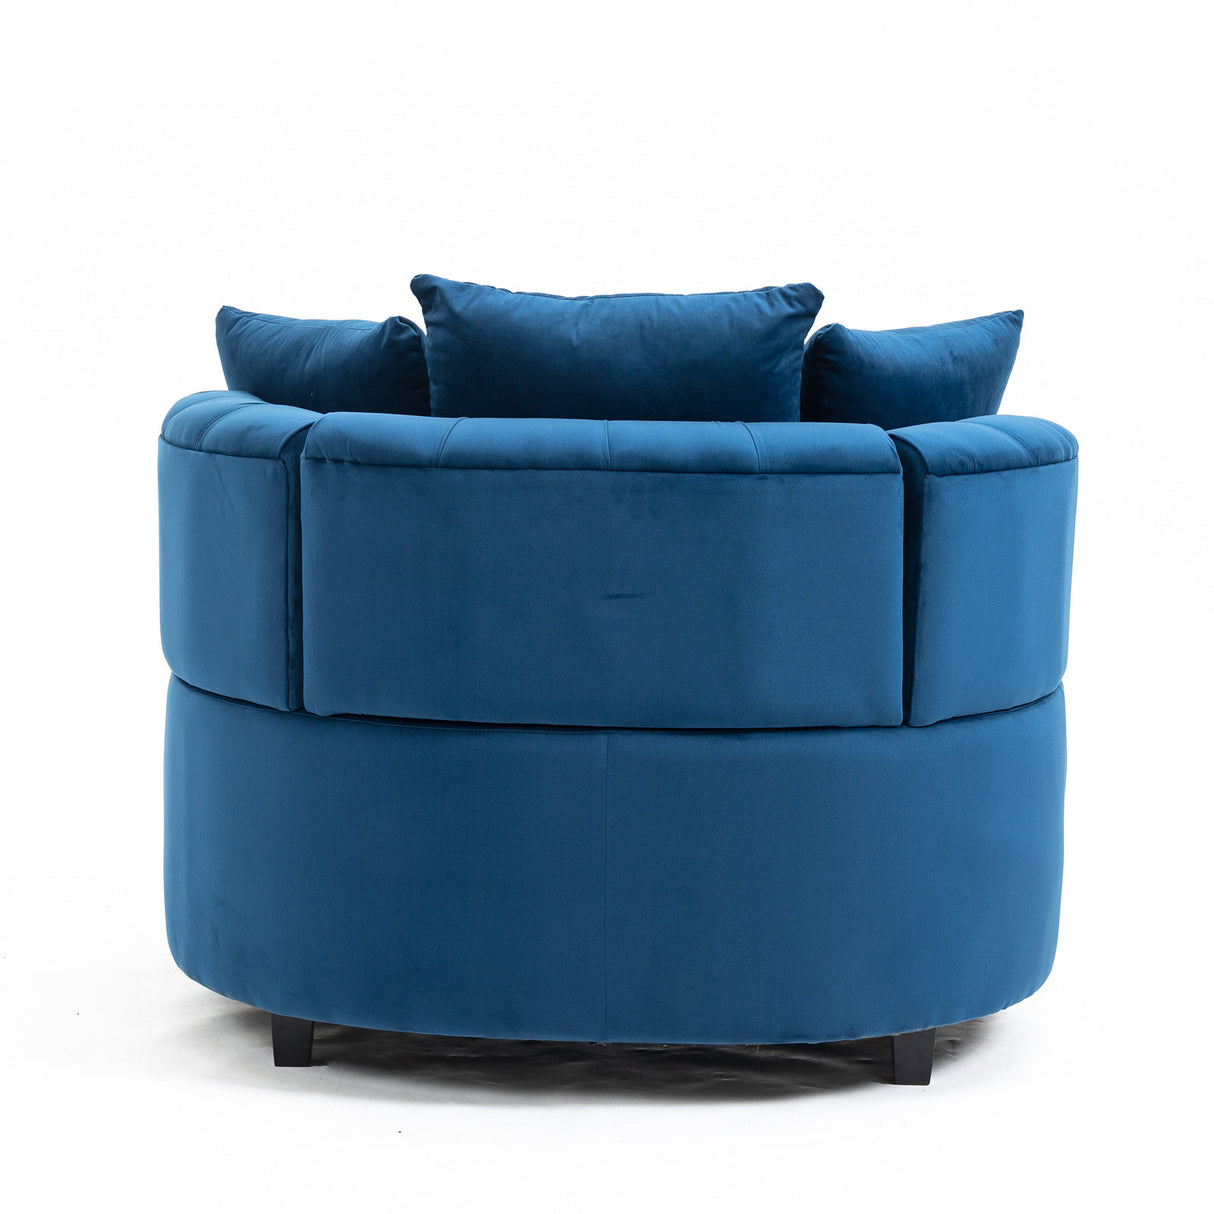 A&A Furniture,Accent Chair / Classical Barrel Chair for living room / Modern Leisure Sofa Chair (Blue) Home Elegance USA